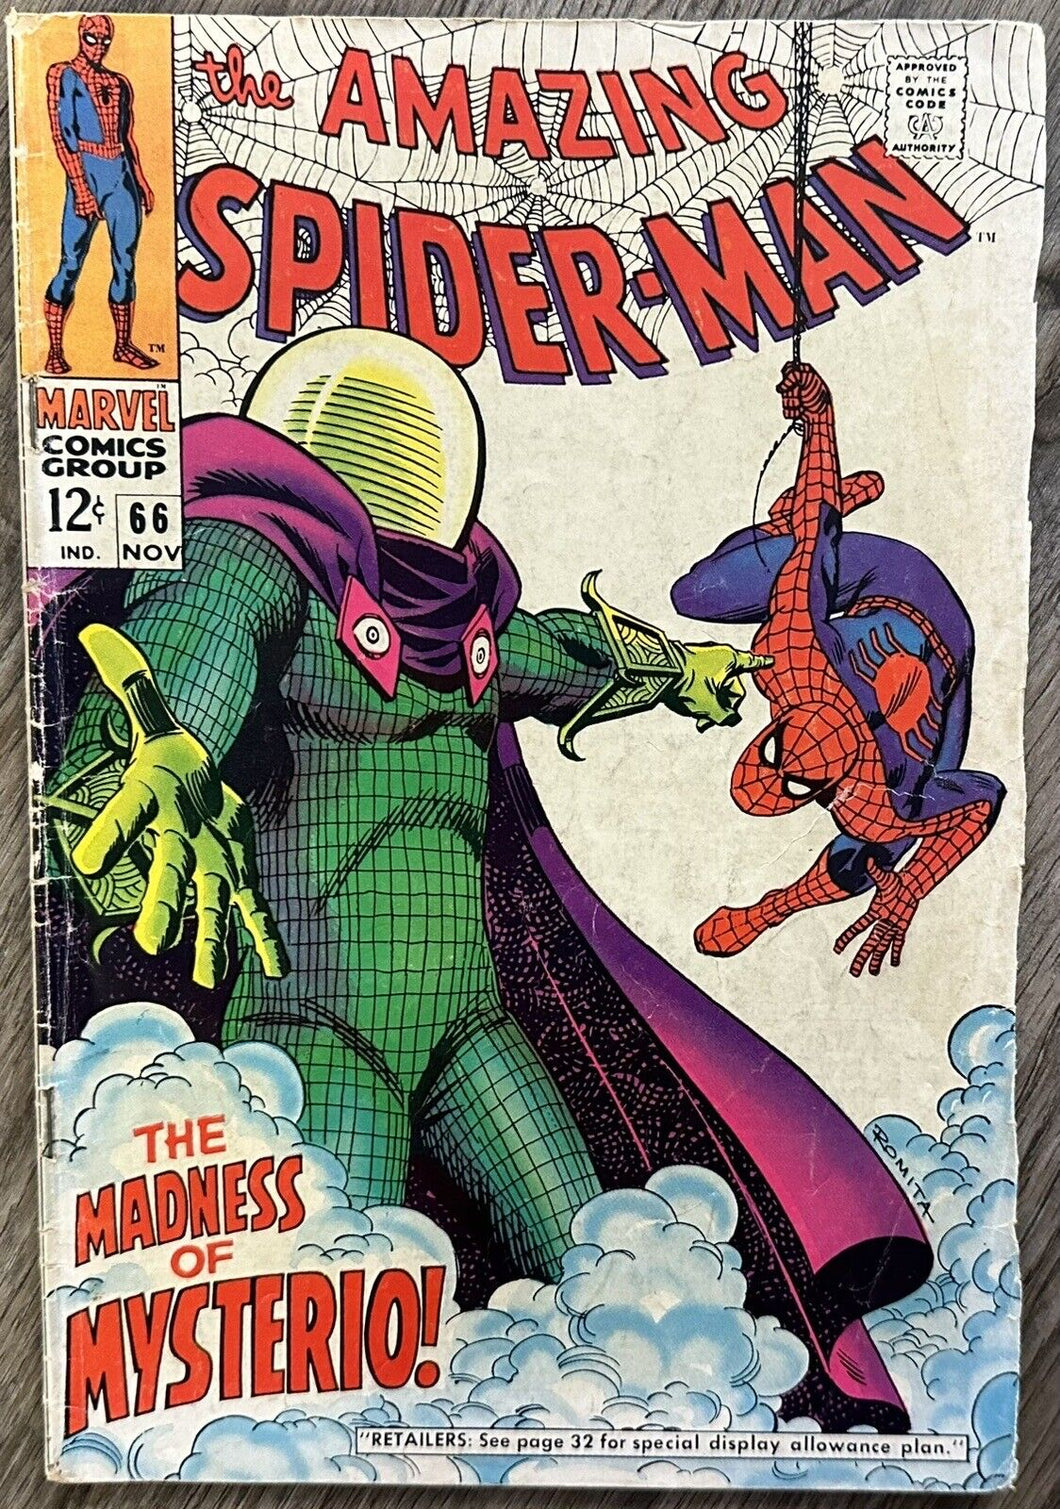 The Amazing Spider-Man #66 (Marvel, 1968) Spider-Man battles Mysterio. Green Goblin cameo.